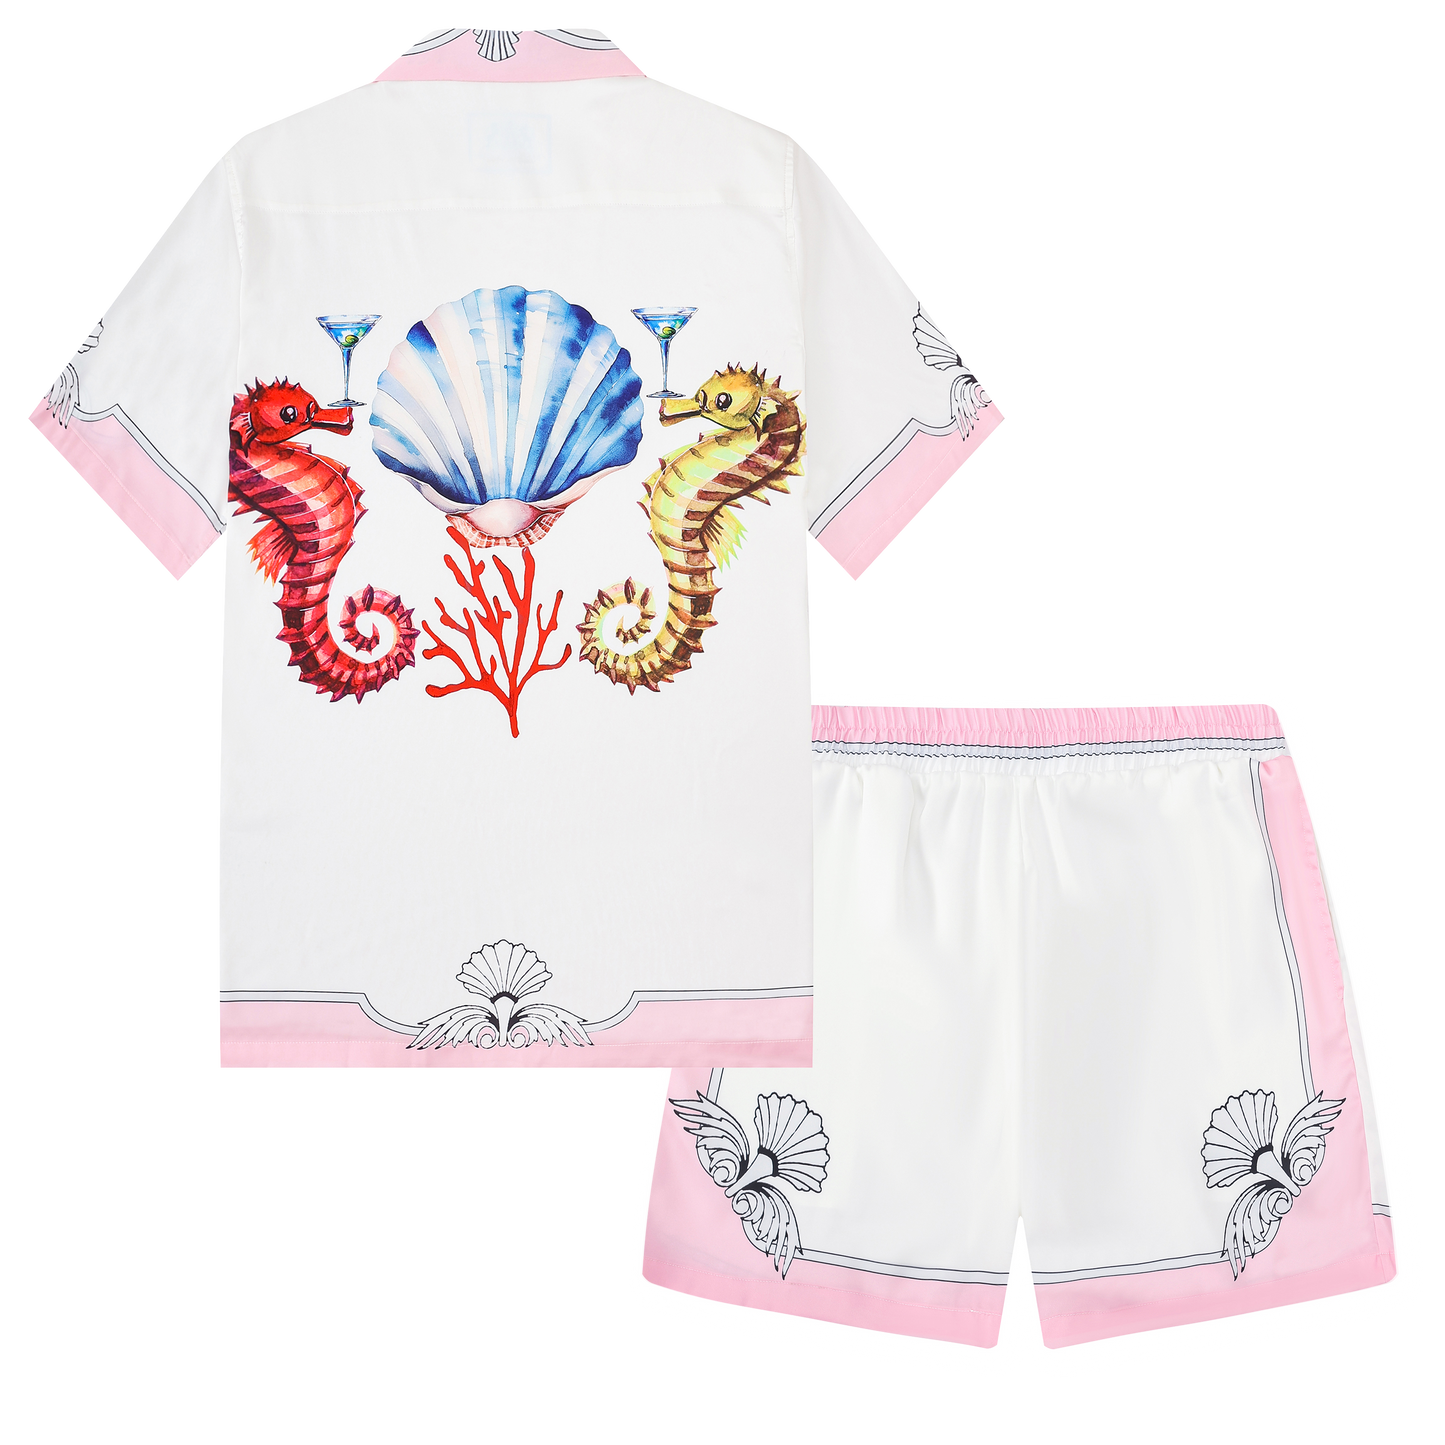 Marine Seahorse Pattern Pink Waistband Shorts